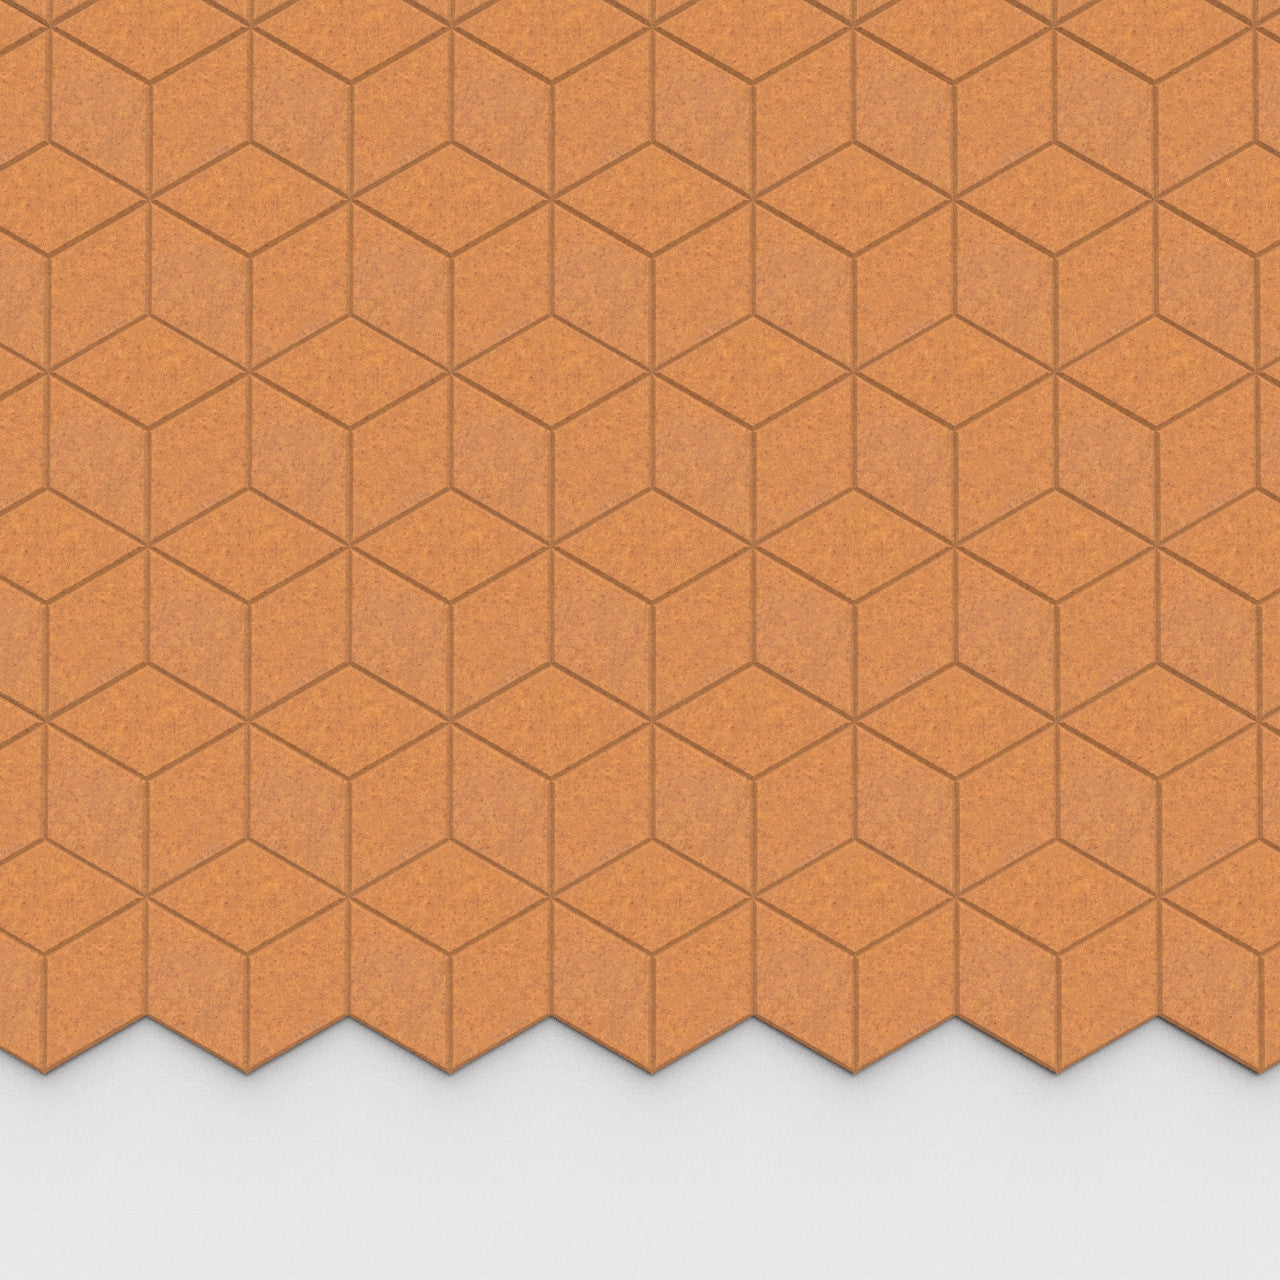 100% Recycled PET Felt Hexagon Diamond Small Acoustic Tile Honey | Plastock